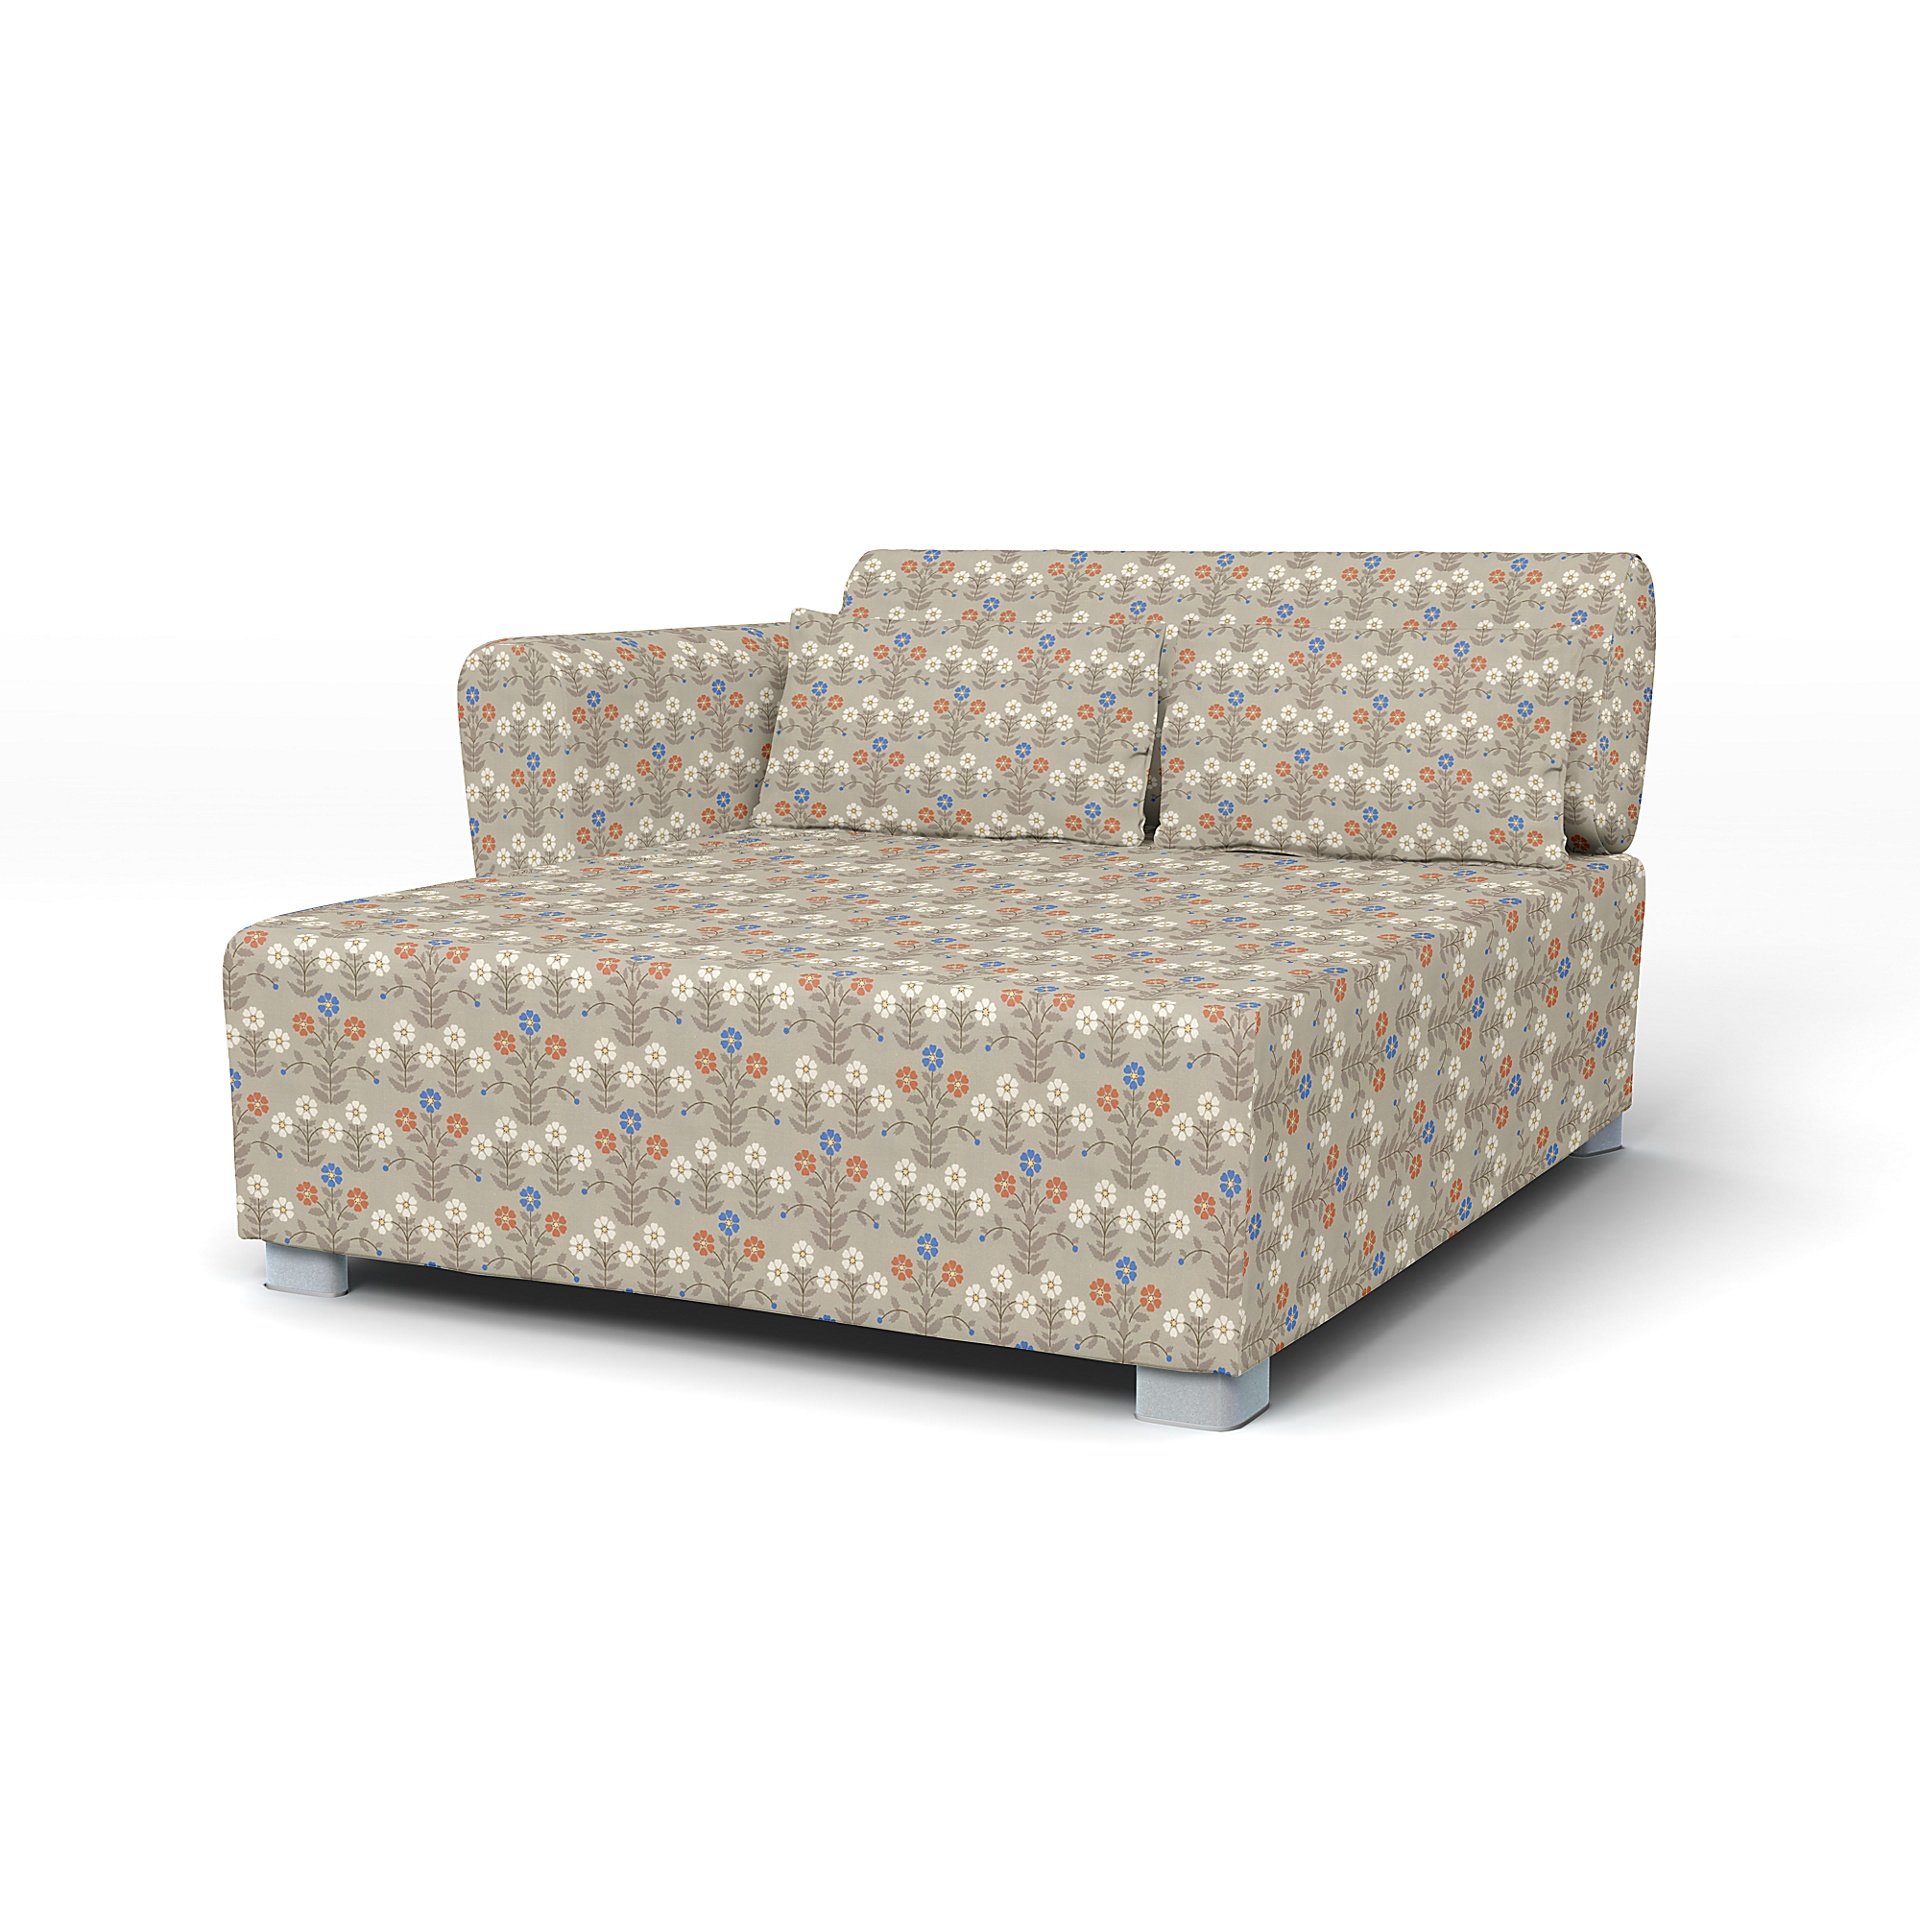 IKEA - Mysinge Seating Module Cover, Sippor Blue/Orange, BEMZ x BORASTAPETER COLLECTION - Bemz